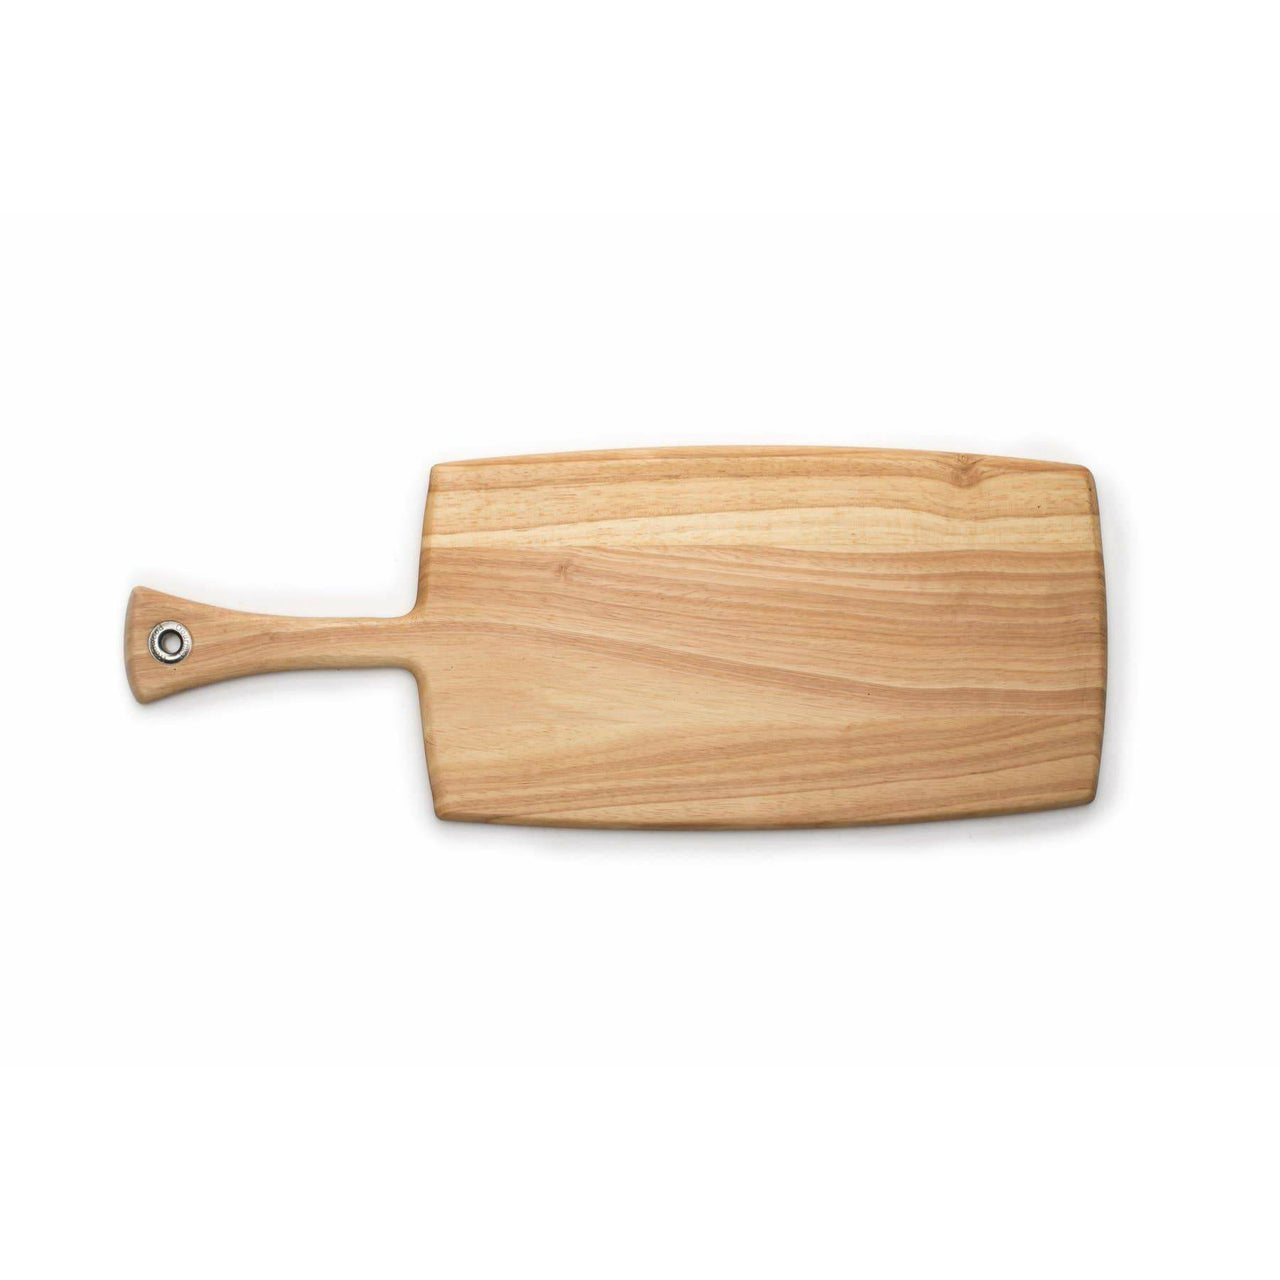 Ironwood Gourmet Large Rectangular Paddle Board, Blonde Wood  Fox Run Brands   